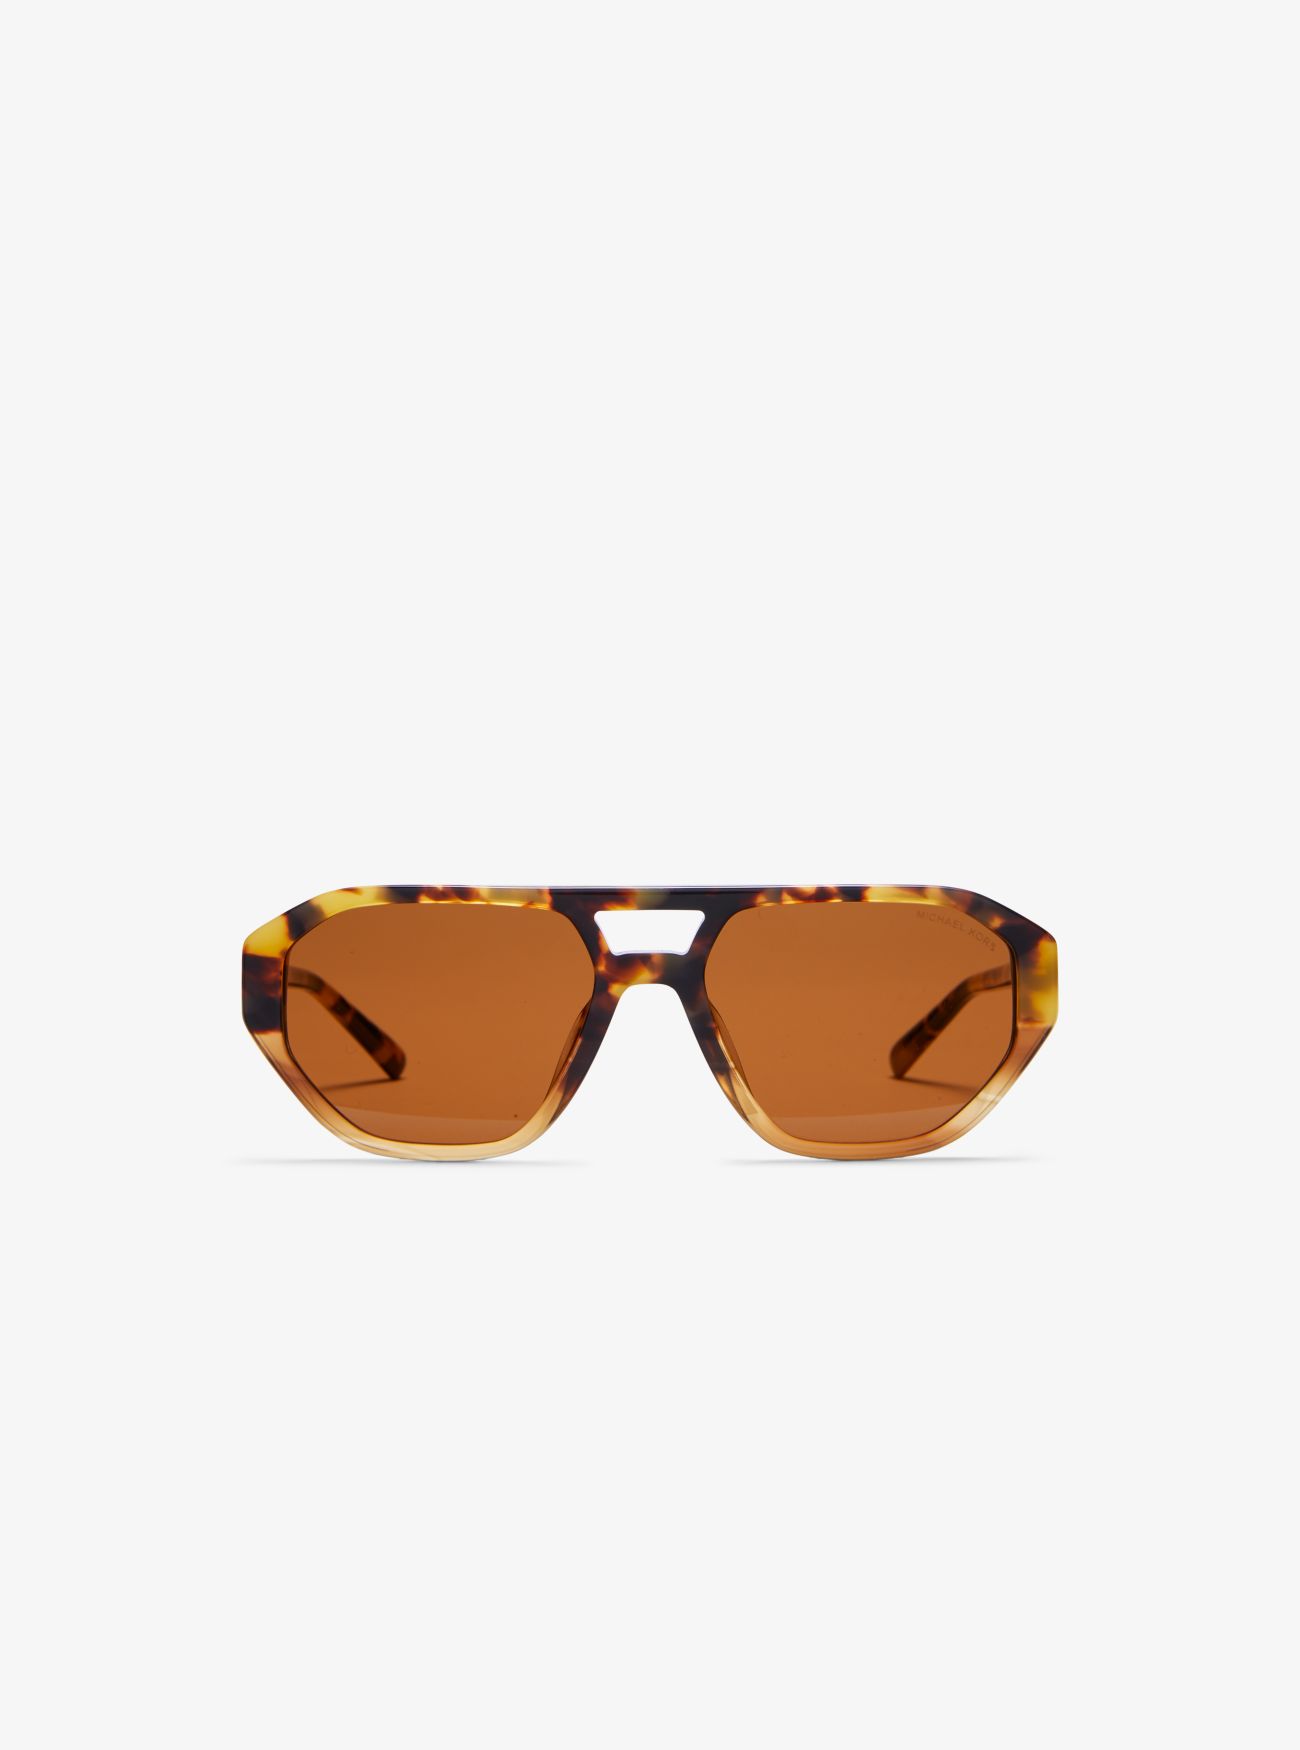 MK Zurich Sunglasses - Brown - Michael Kors